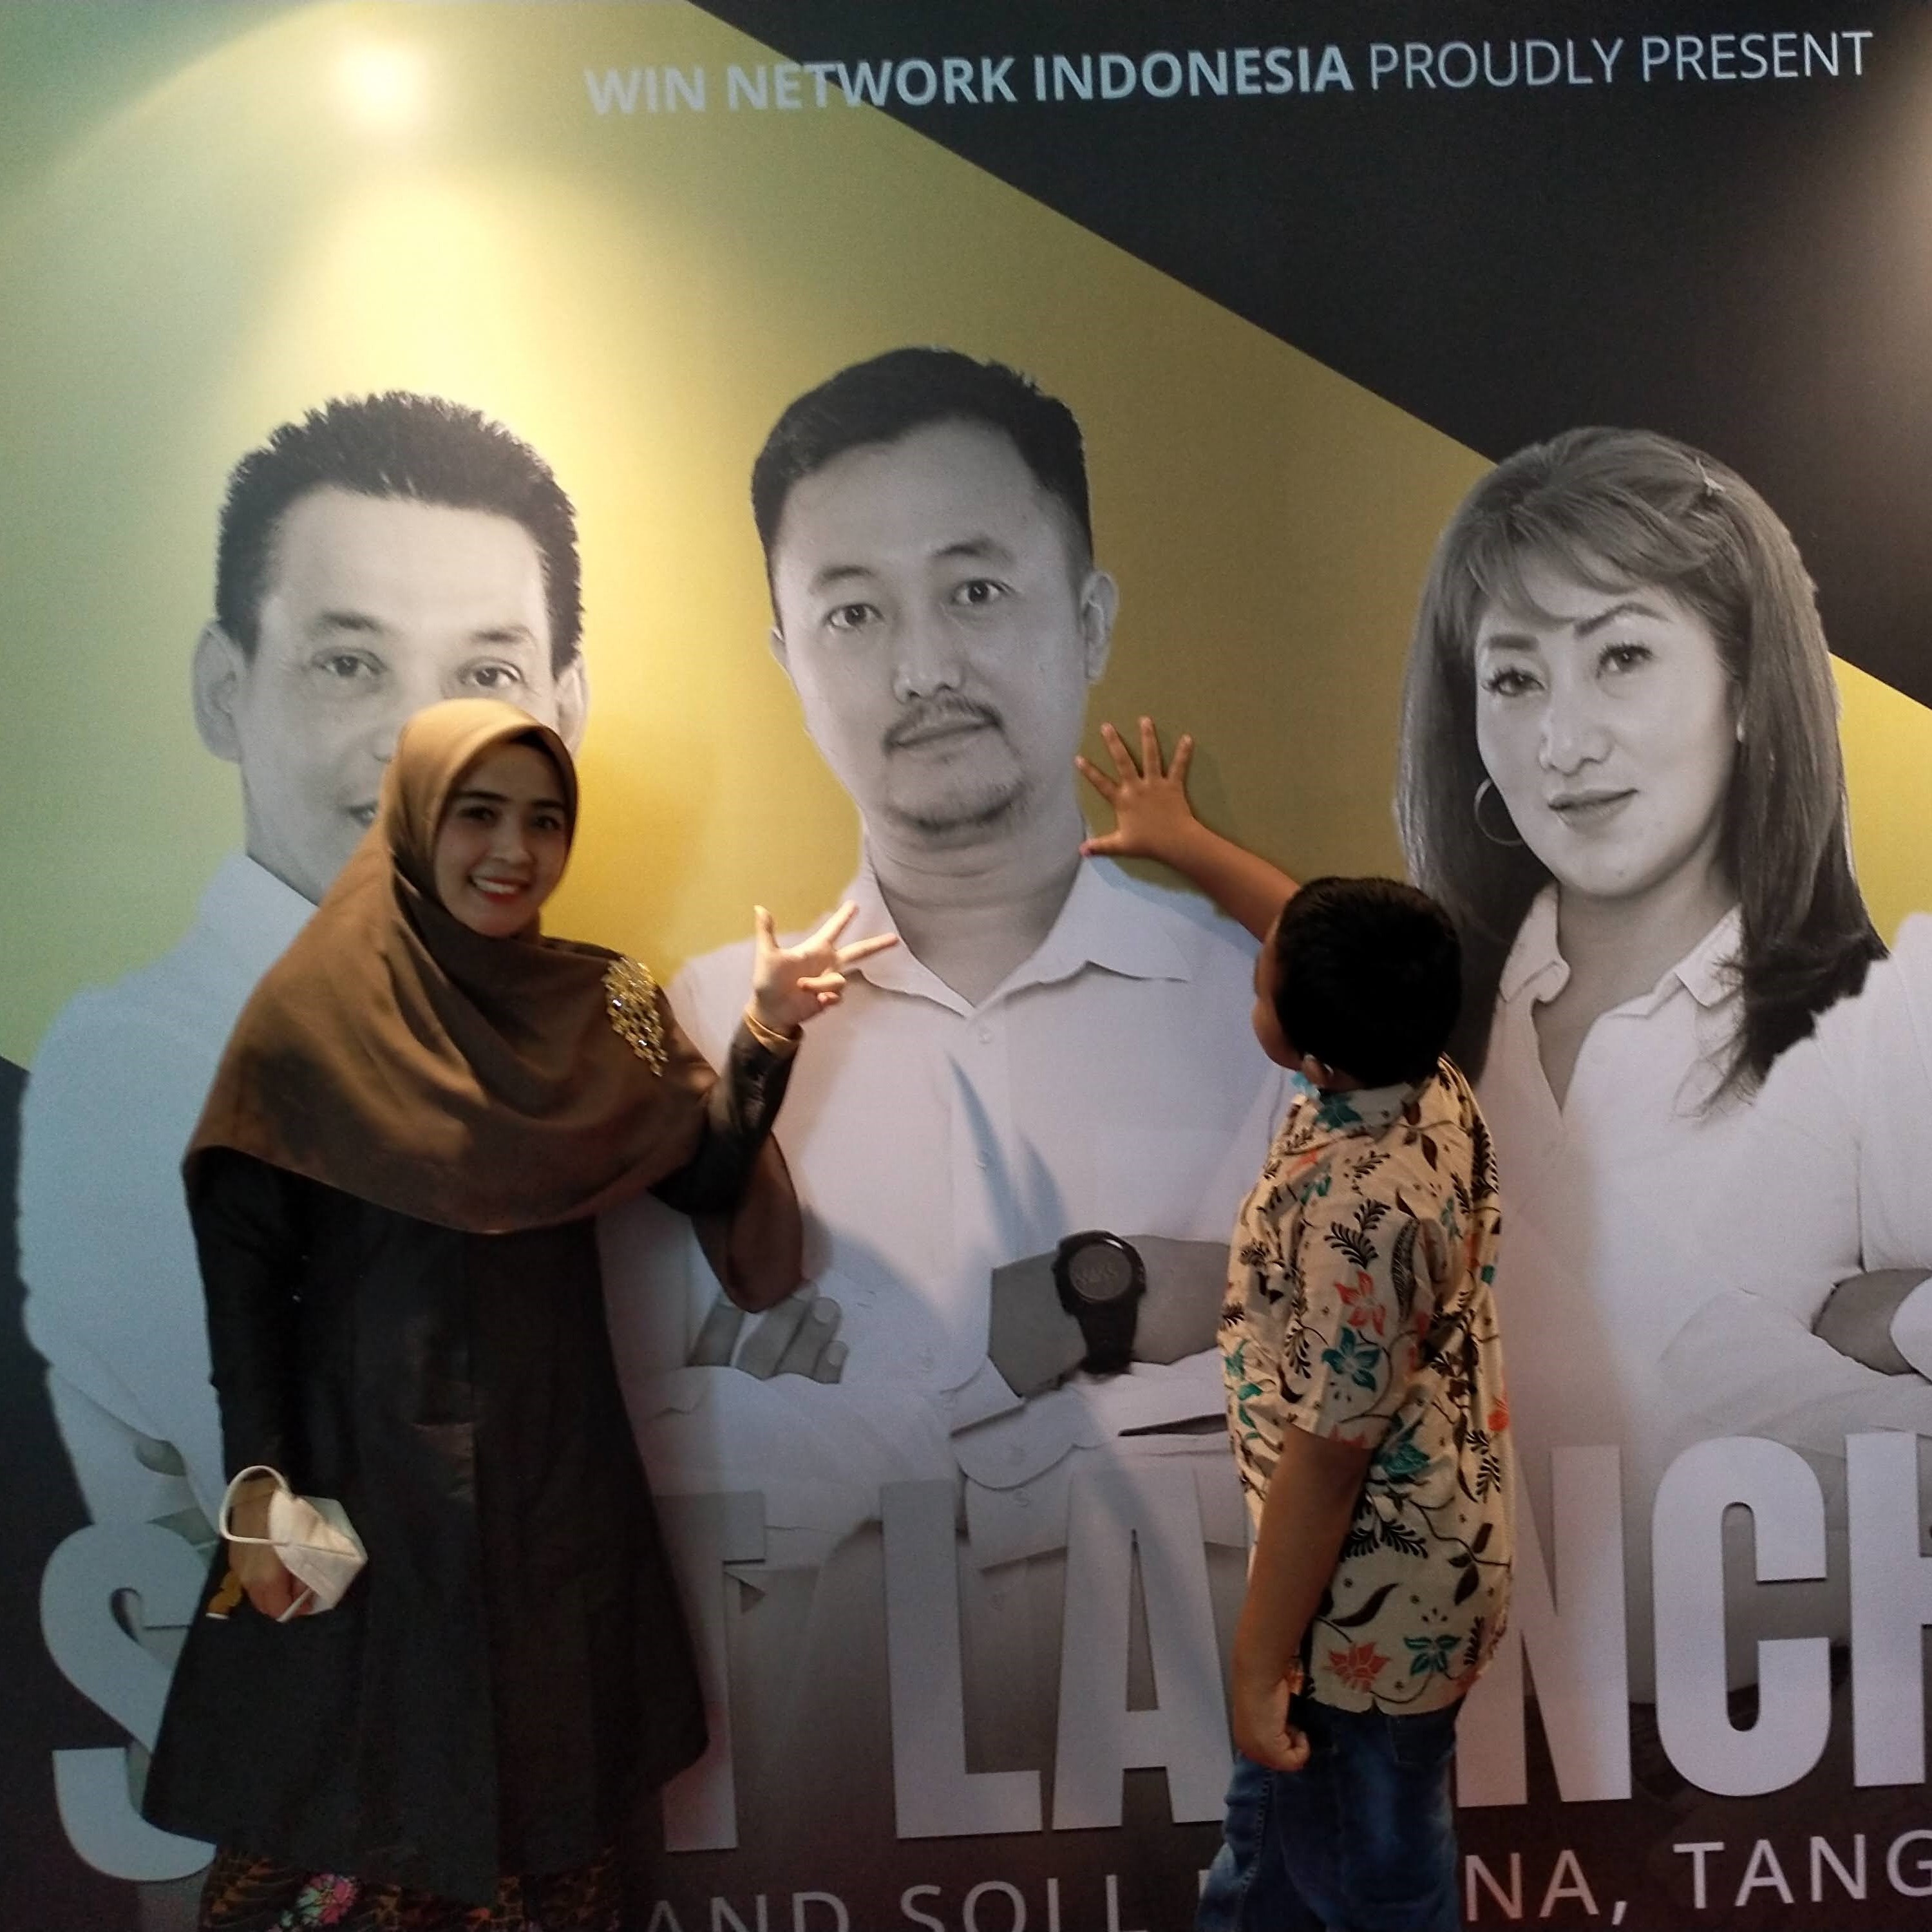 Hallo Networkers Indonesia